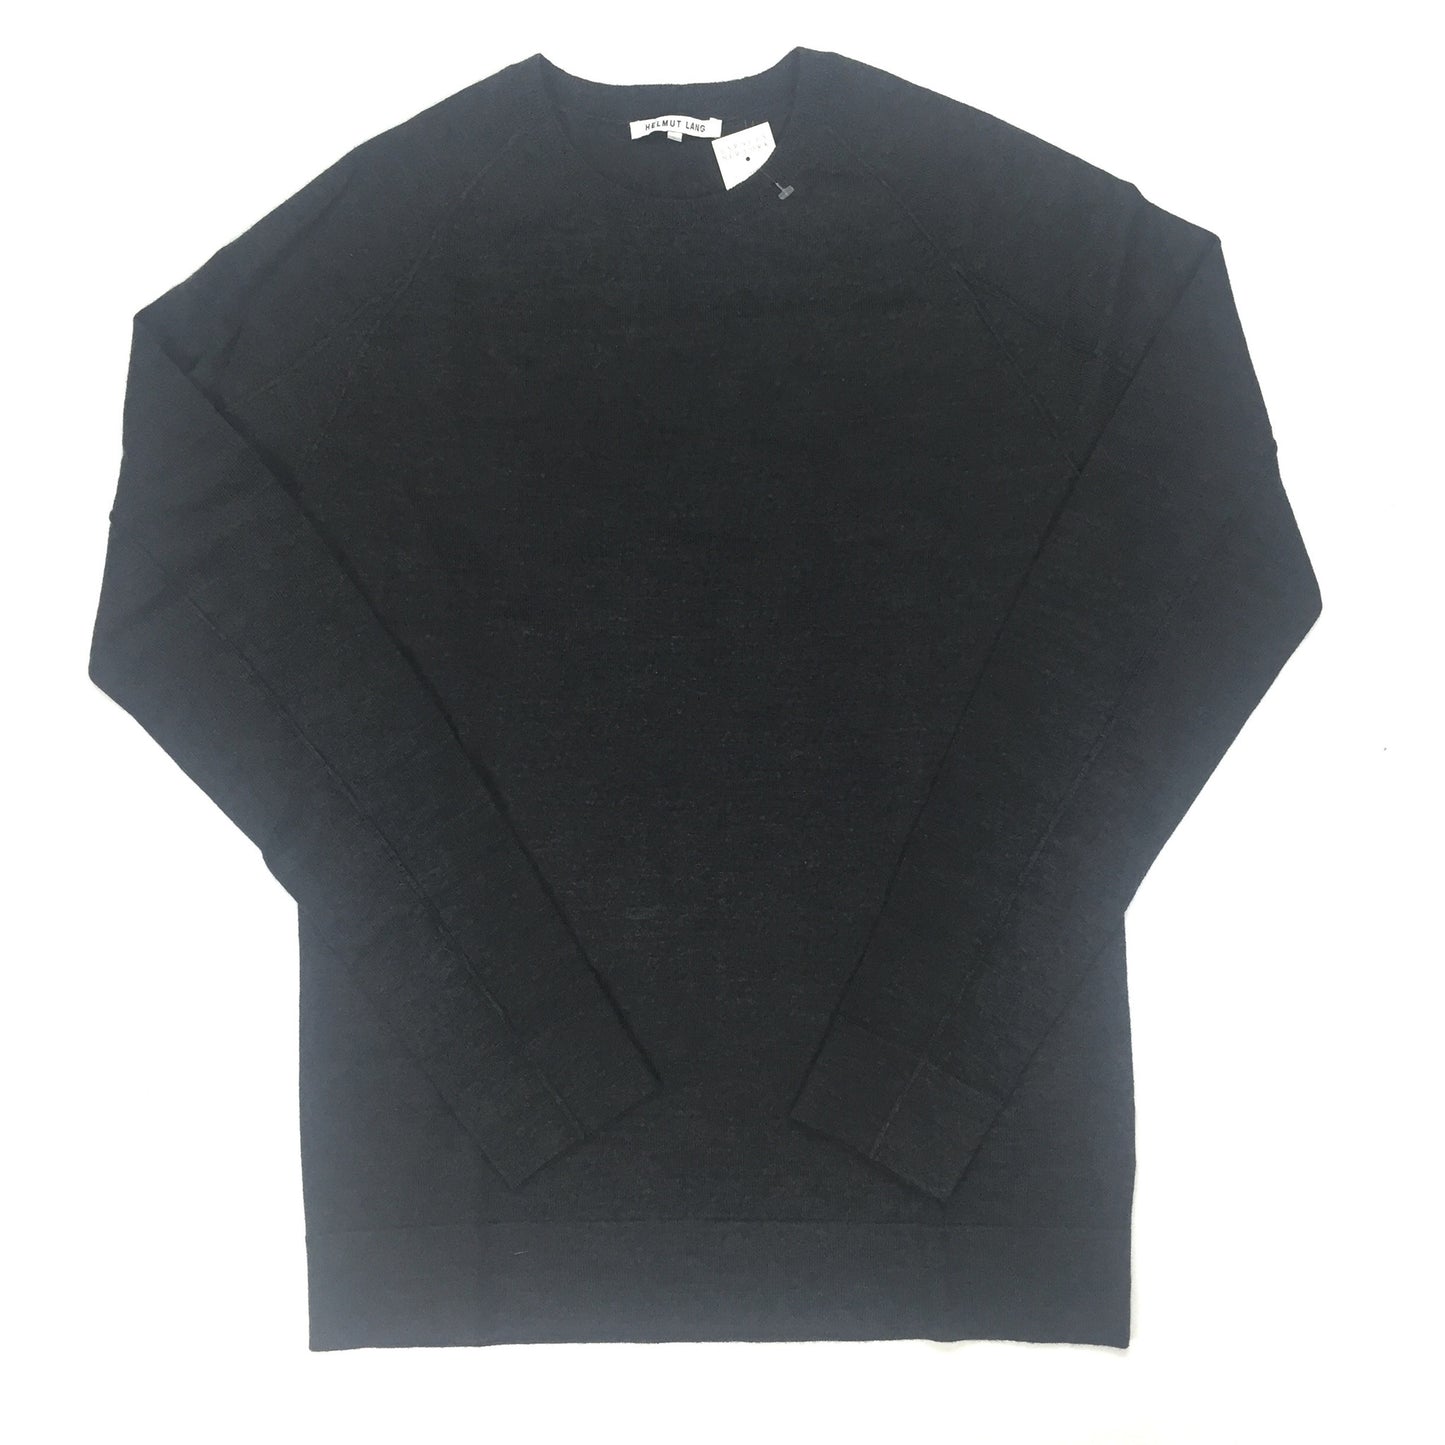 Helmut Lang - Charcoal Wool Crewneck Sweater